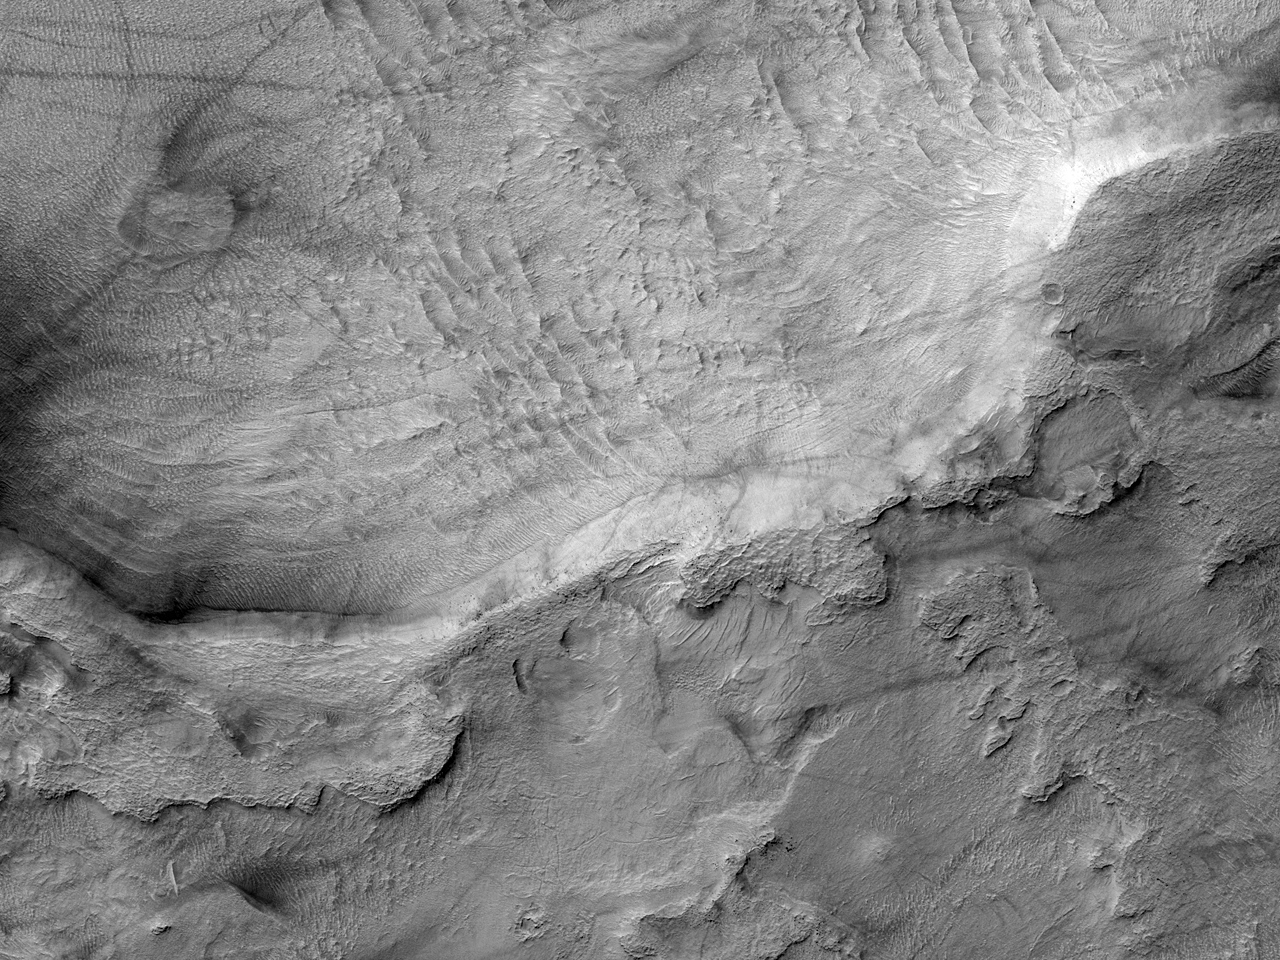 Ударный кратер на дне равнины Hellas Planitia